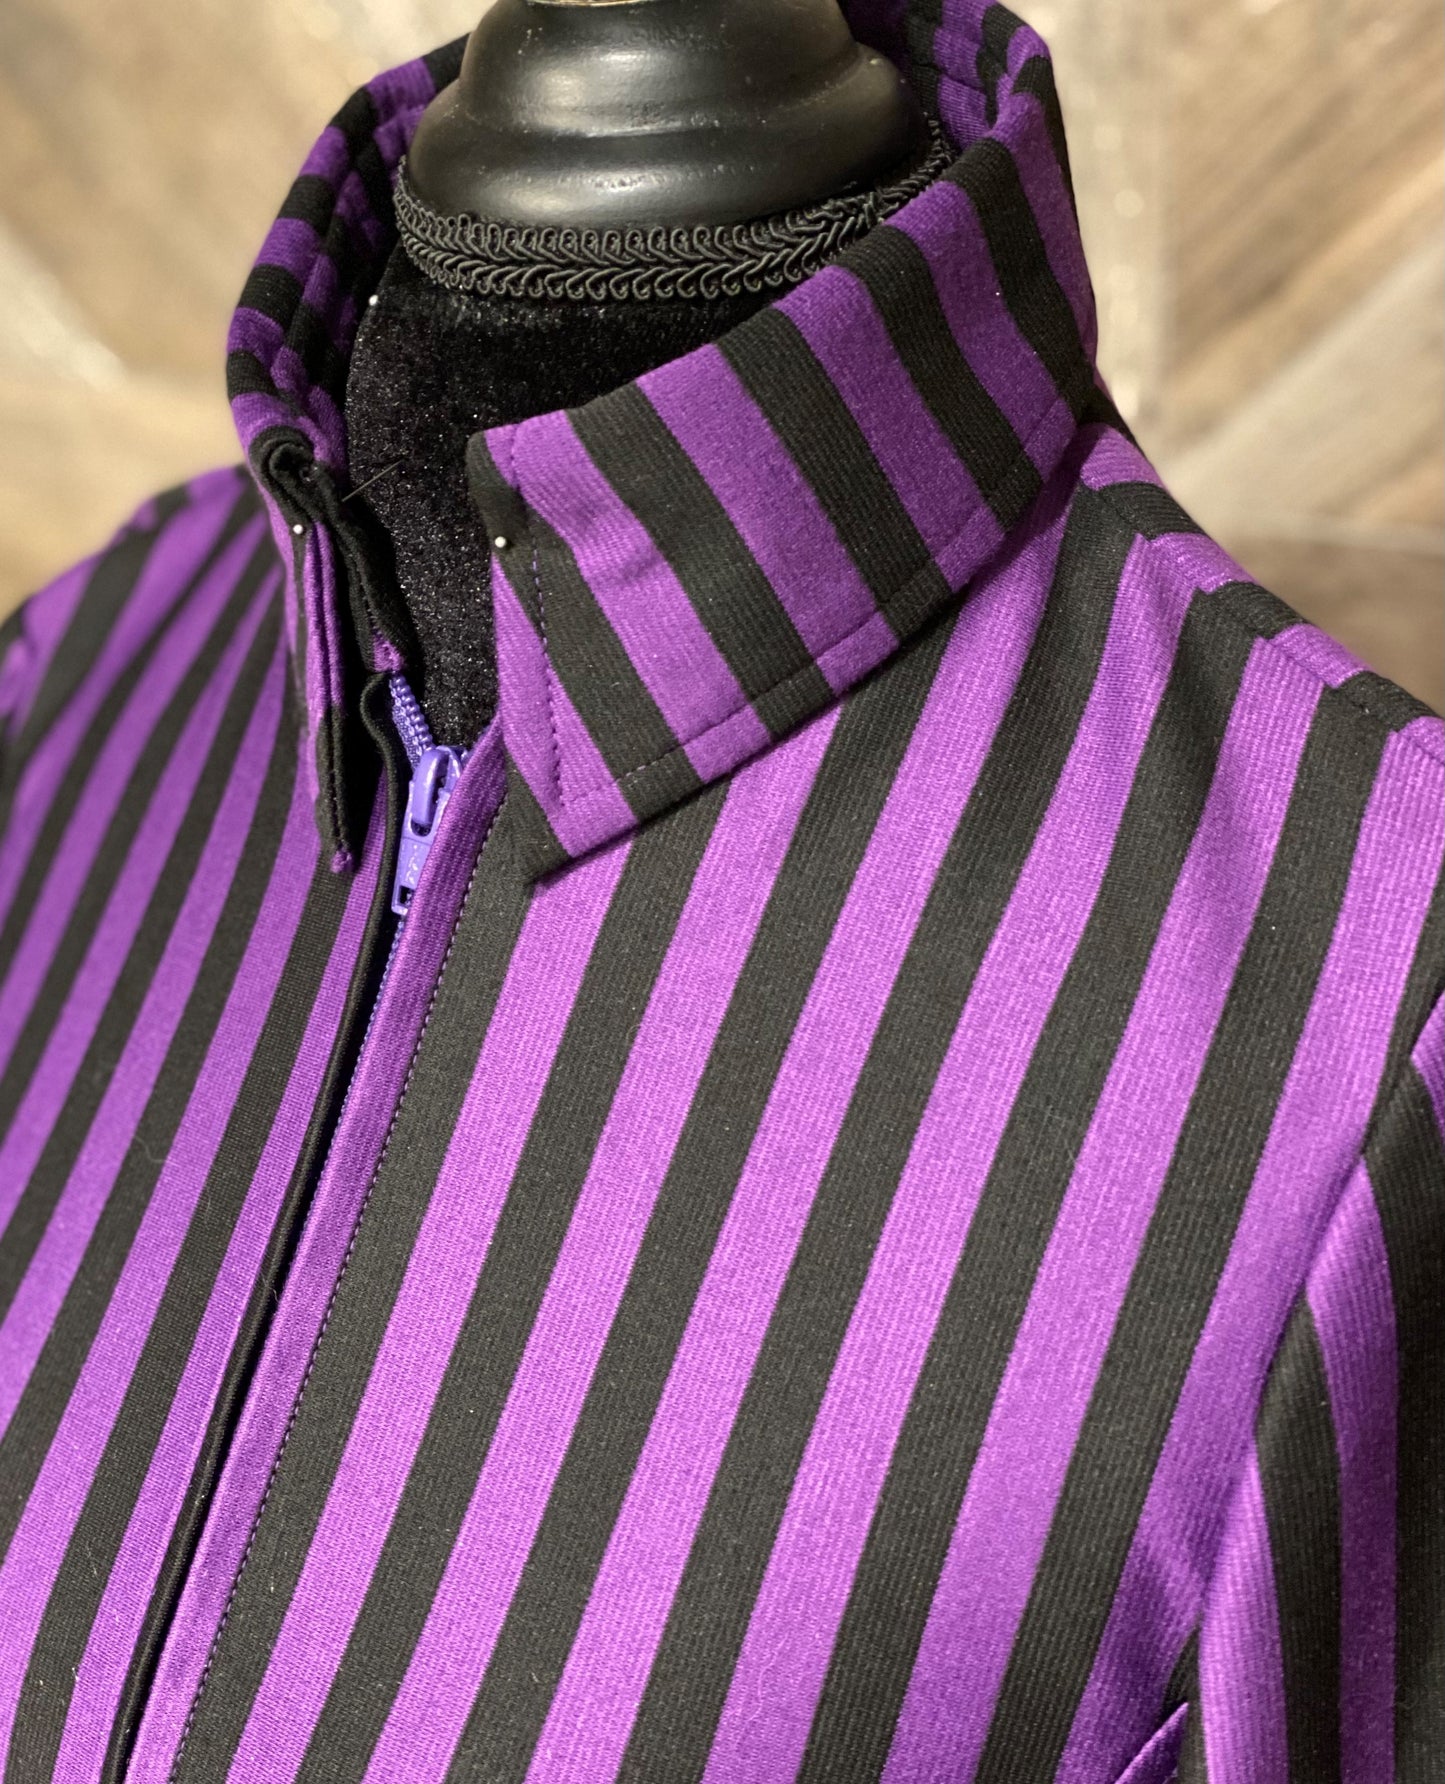 Purple and Black Stripe Shirt